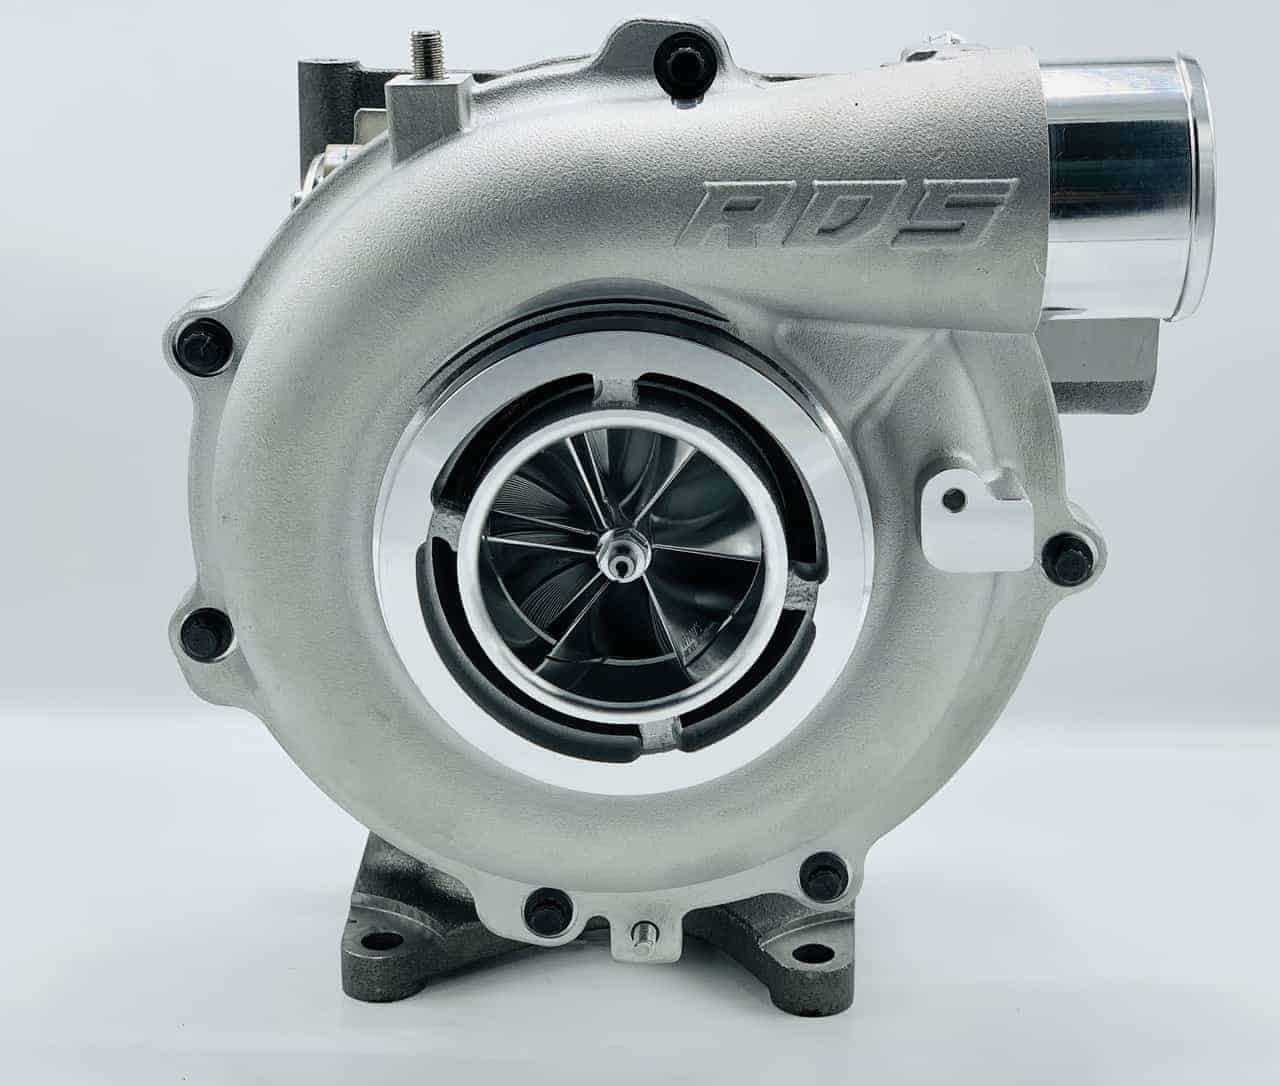 LML 11-16 72mm Duramax Turbocharger Brand New Ryan's Diesel Service